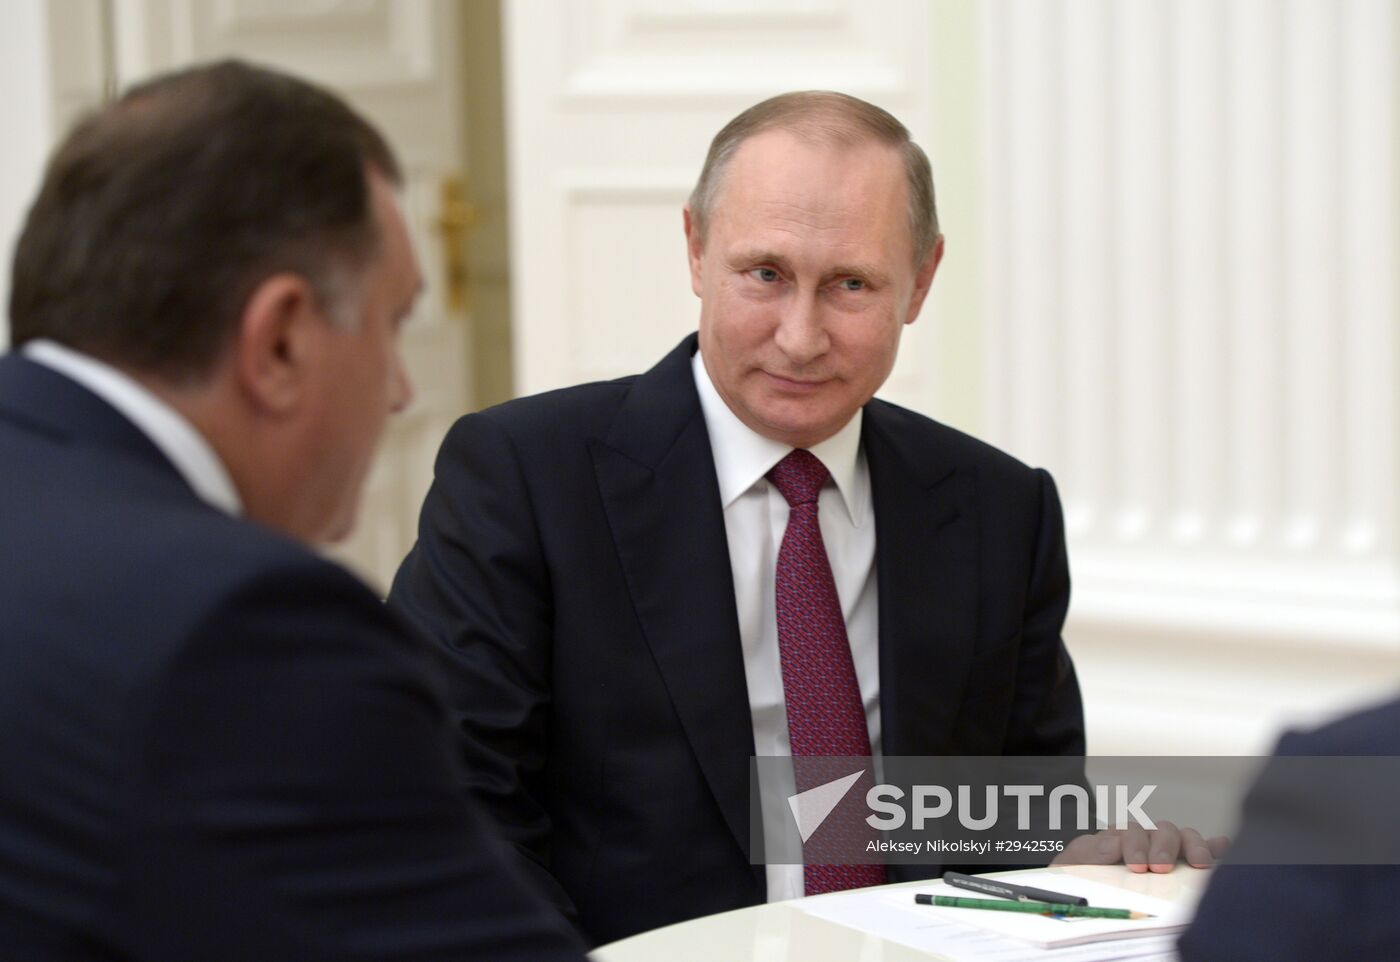 President Putin meets with President Dodik of Republika Srpska in Bosnia and Herzegovina